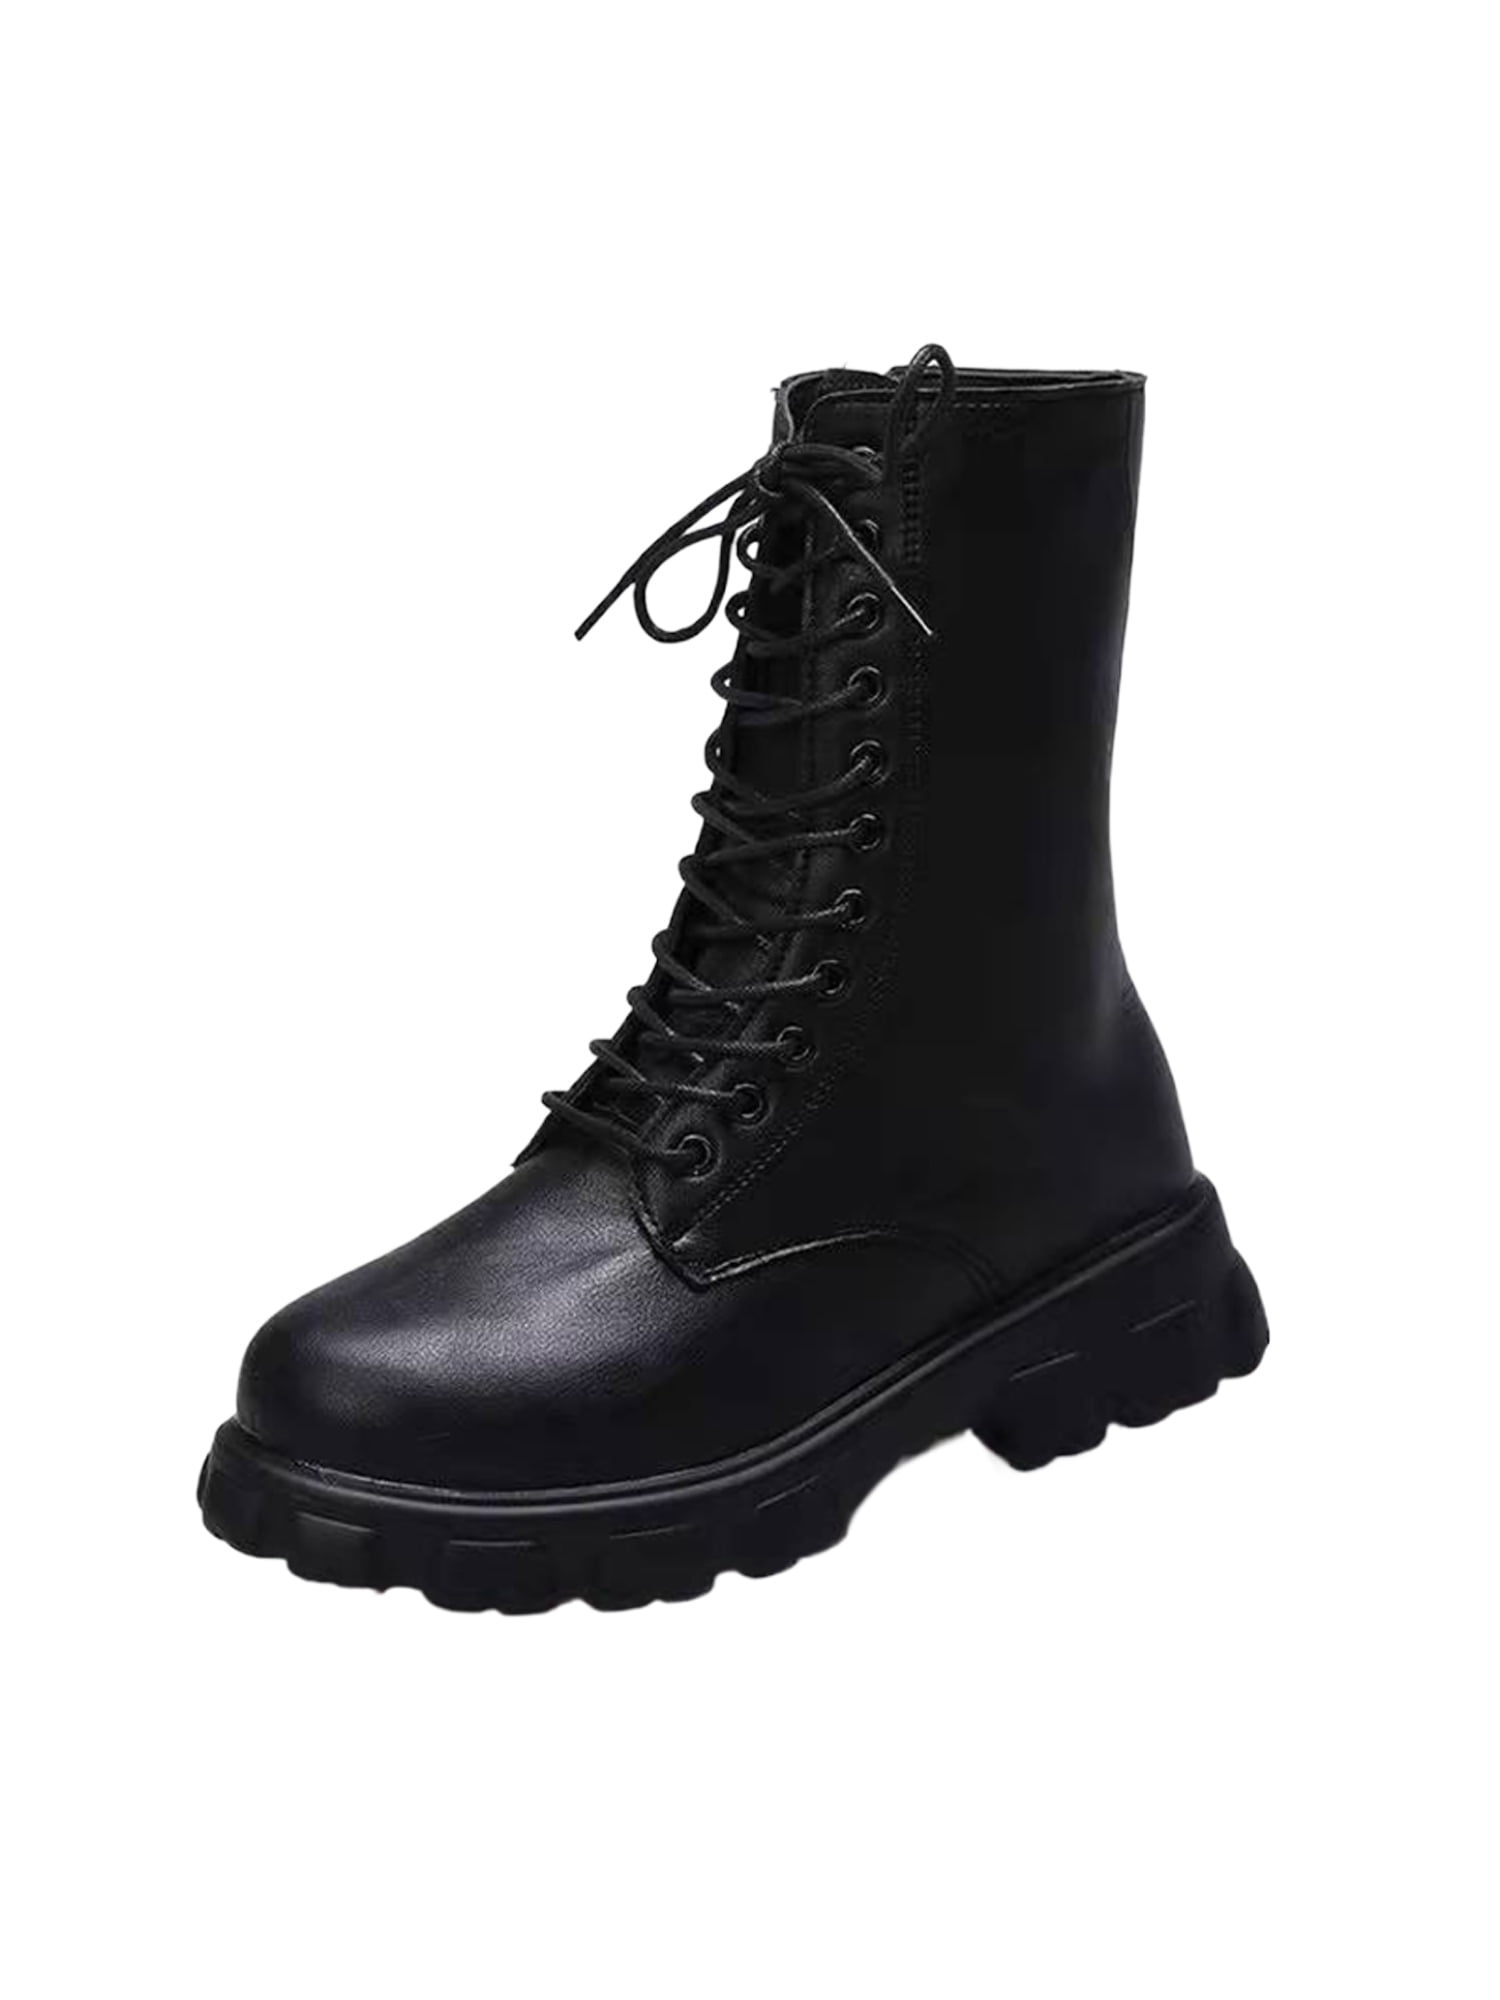 KK Pair of Kings Shoes - Women's Chunky Heel Lug Sole Fashion Ankle Boots,  Formal Black Booties for Women (Black-33, 9) - Walmart.com